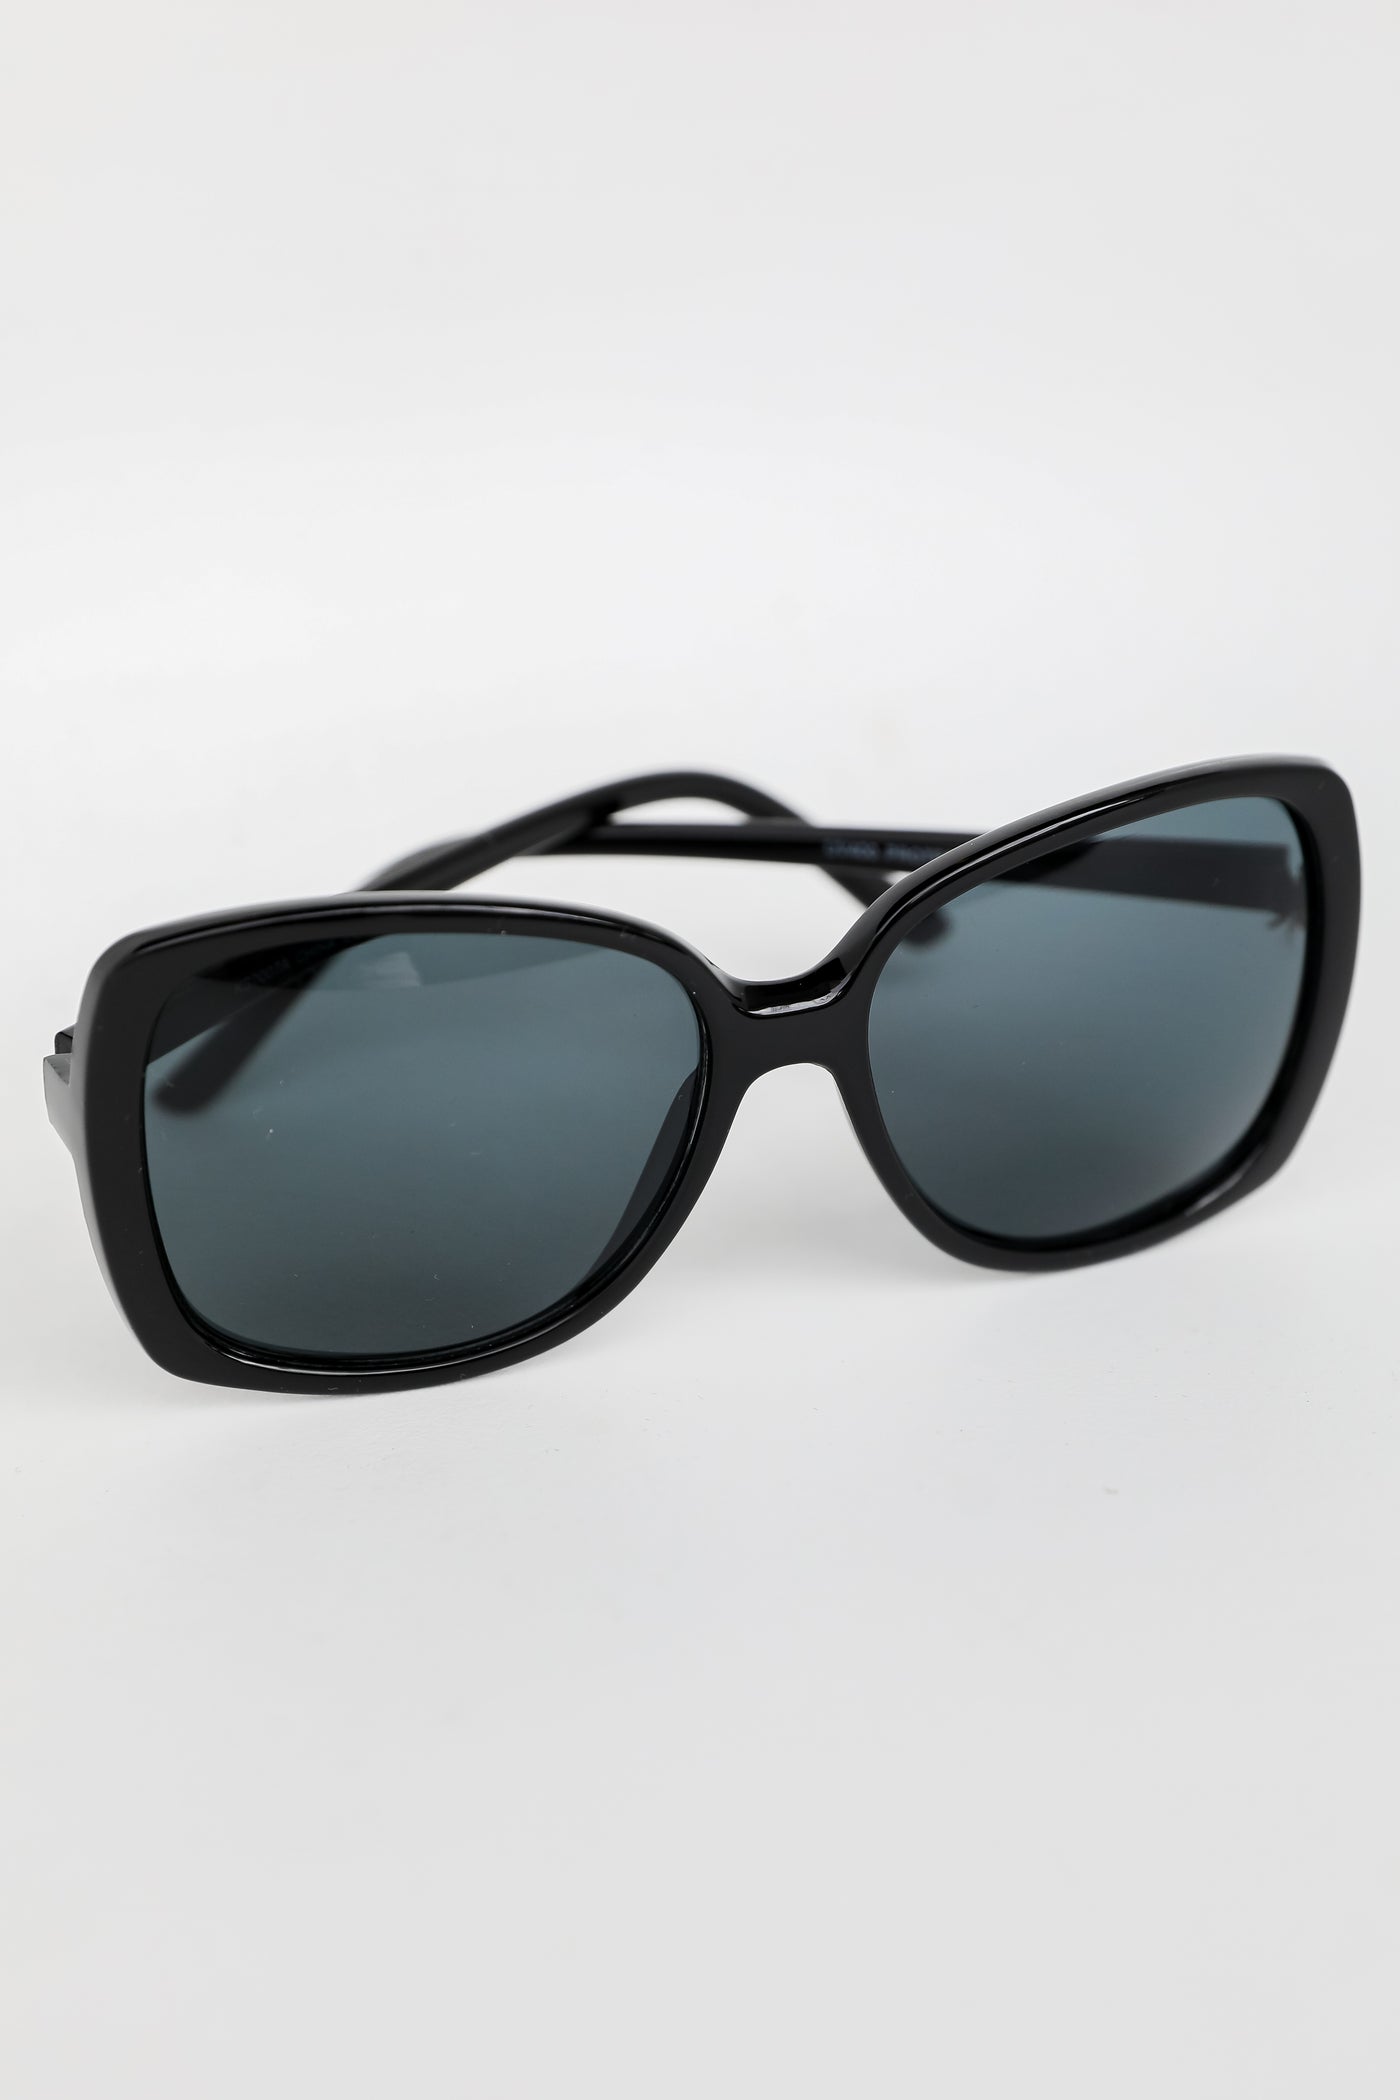 Sunglasses in black